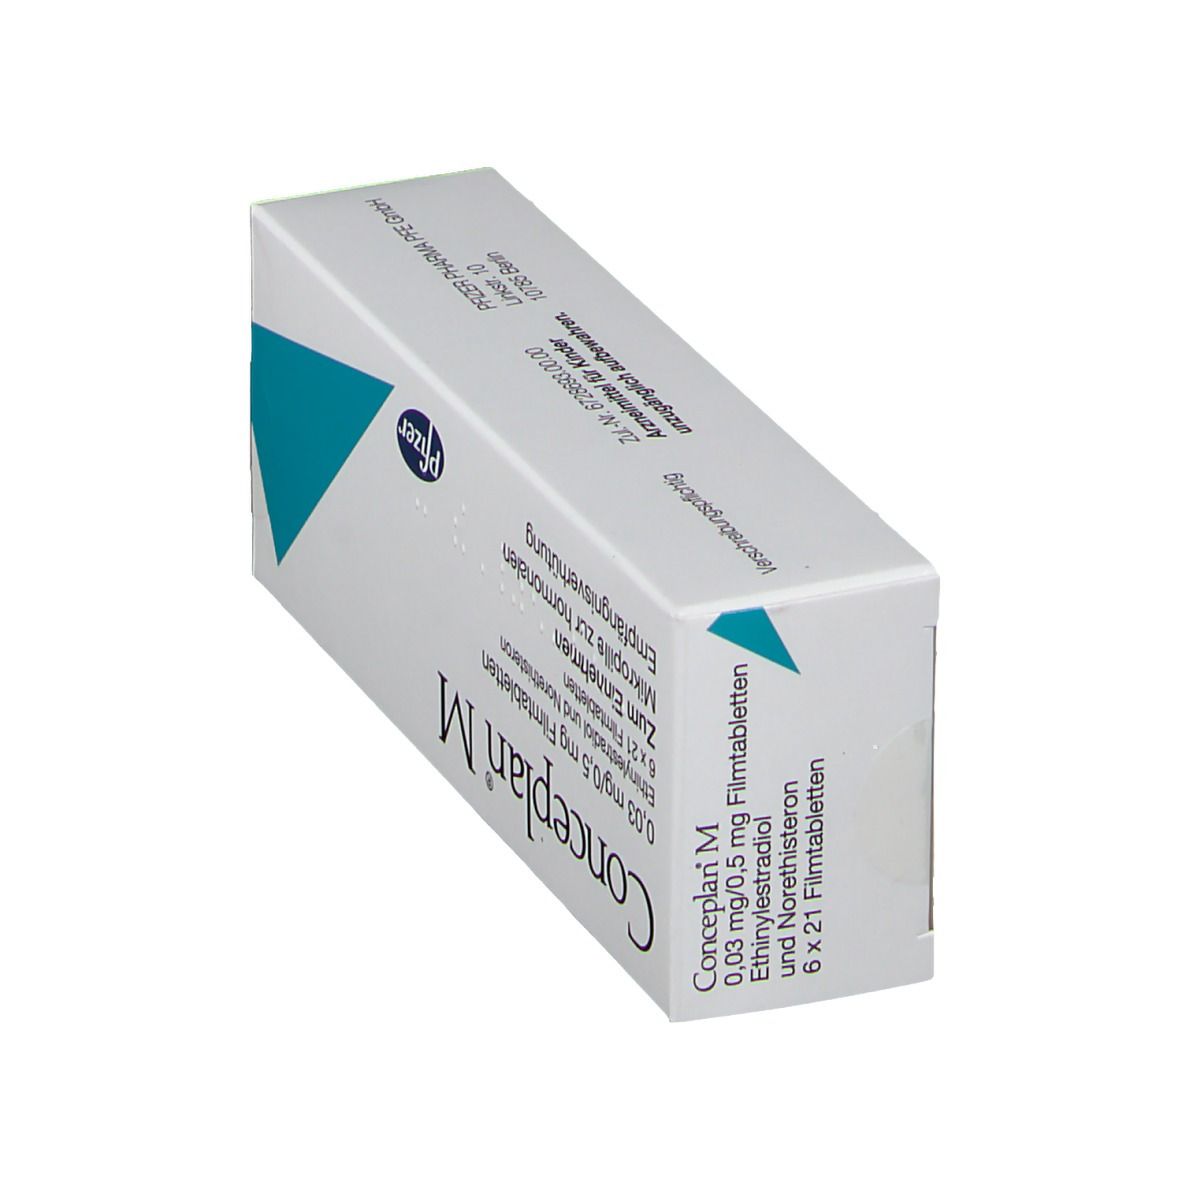 Conceplan® M 0,03 mg/0,5 mg